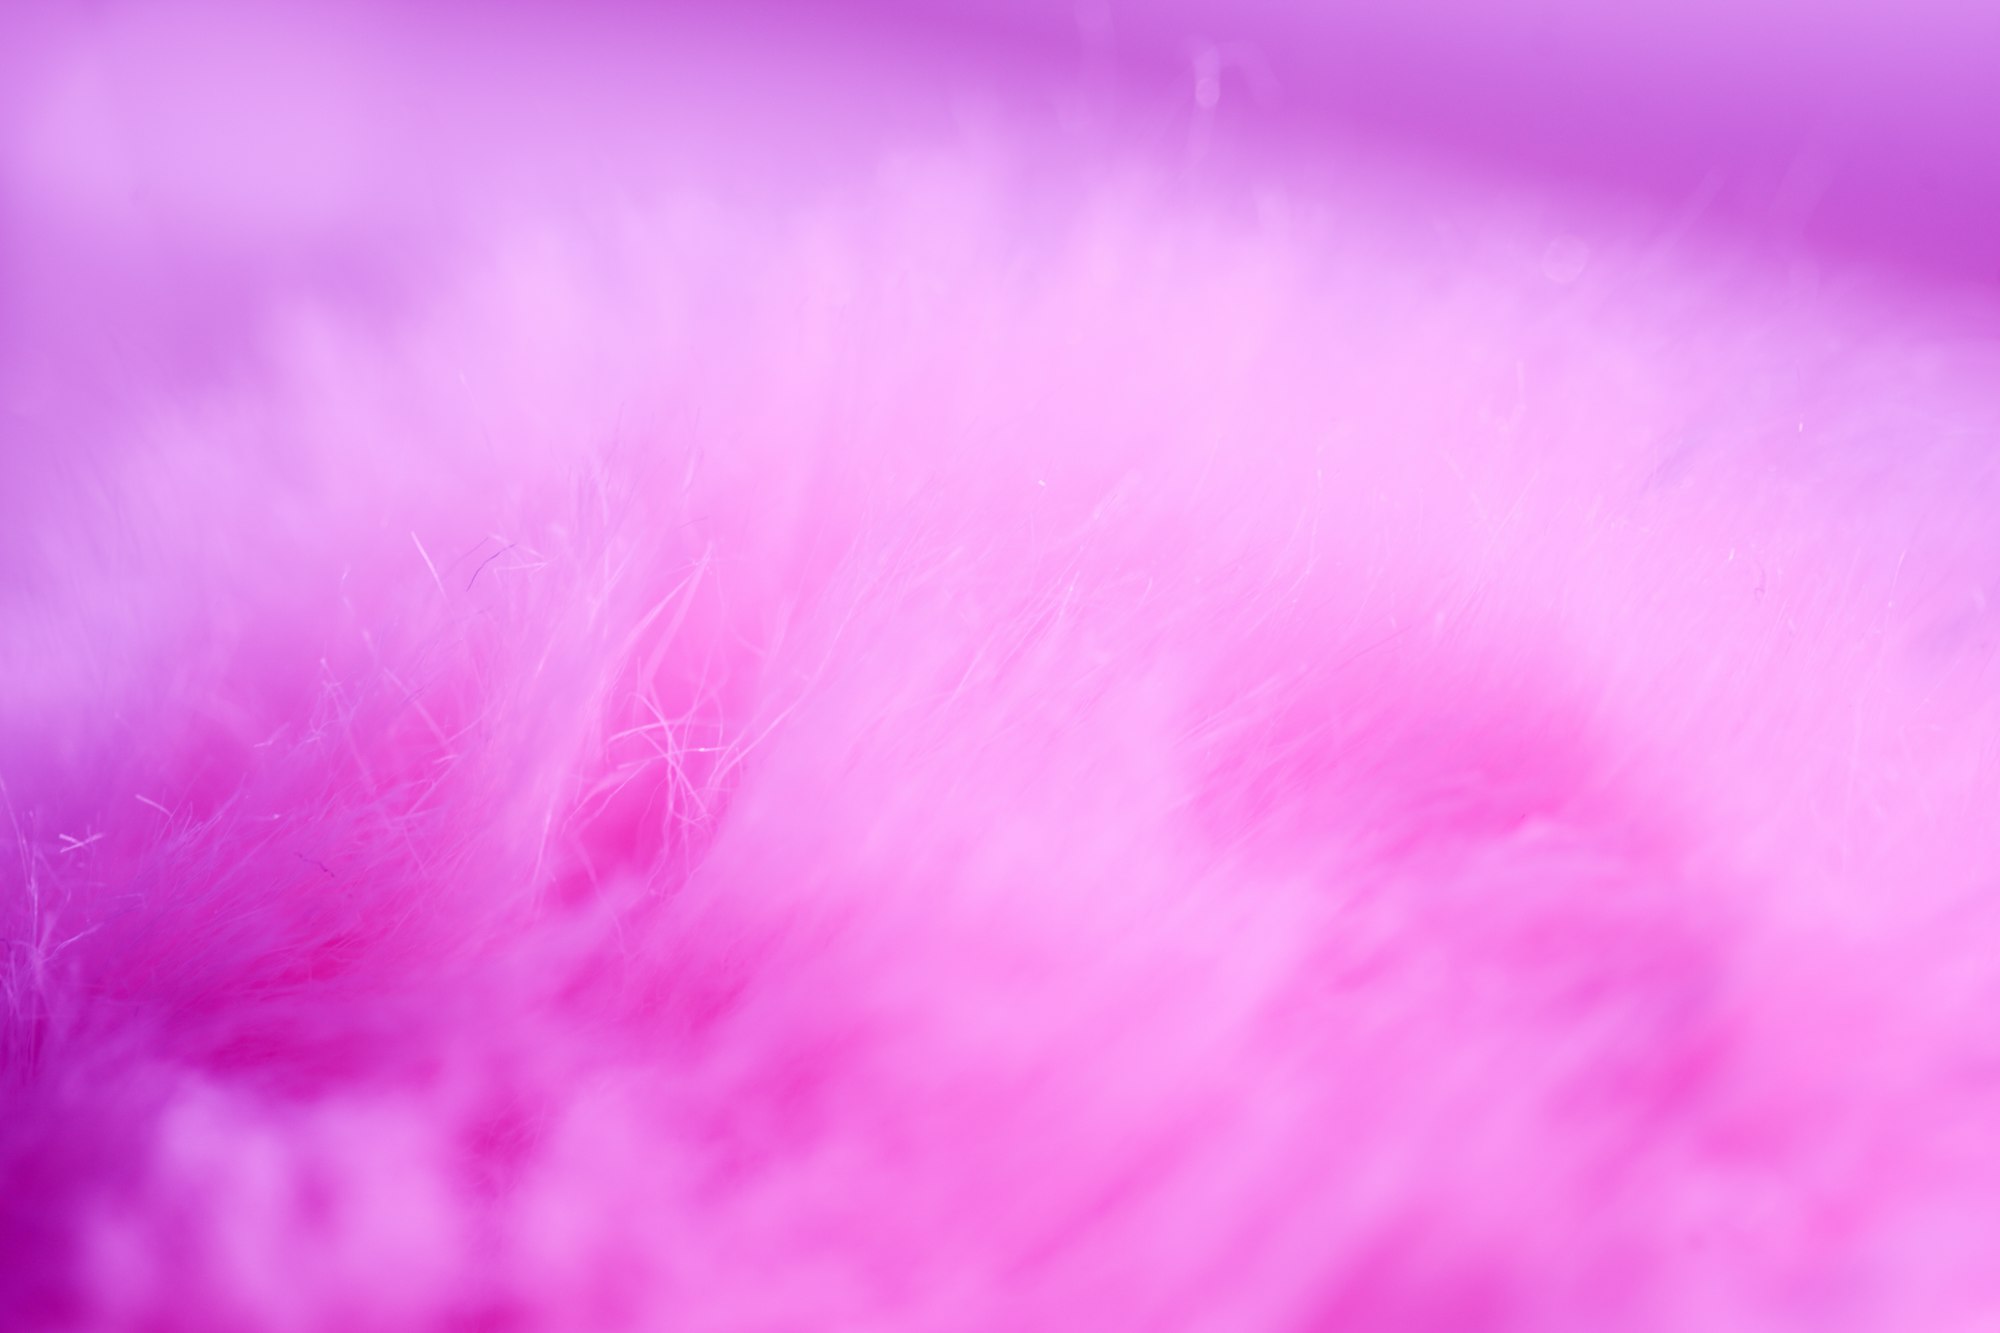 Pinky purple fluffy unicorn fur background. Whimsical and fun.